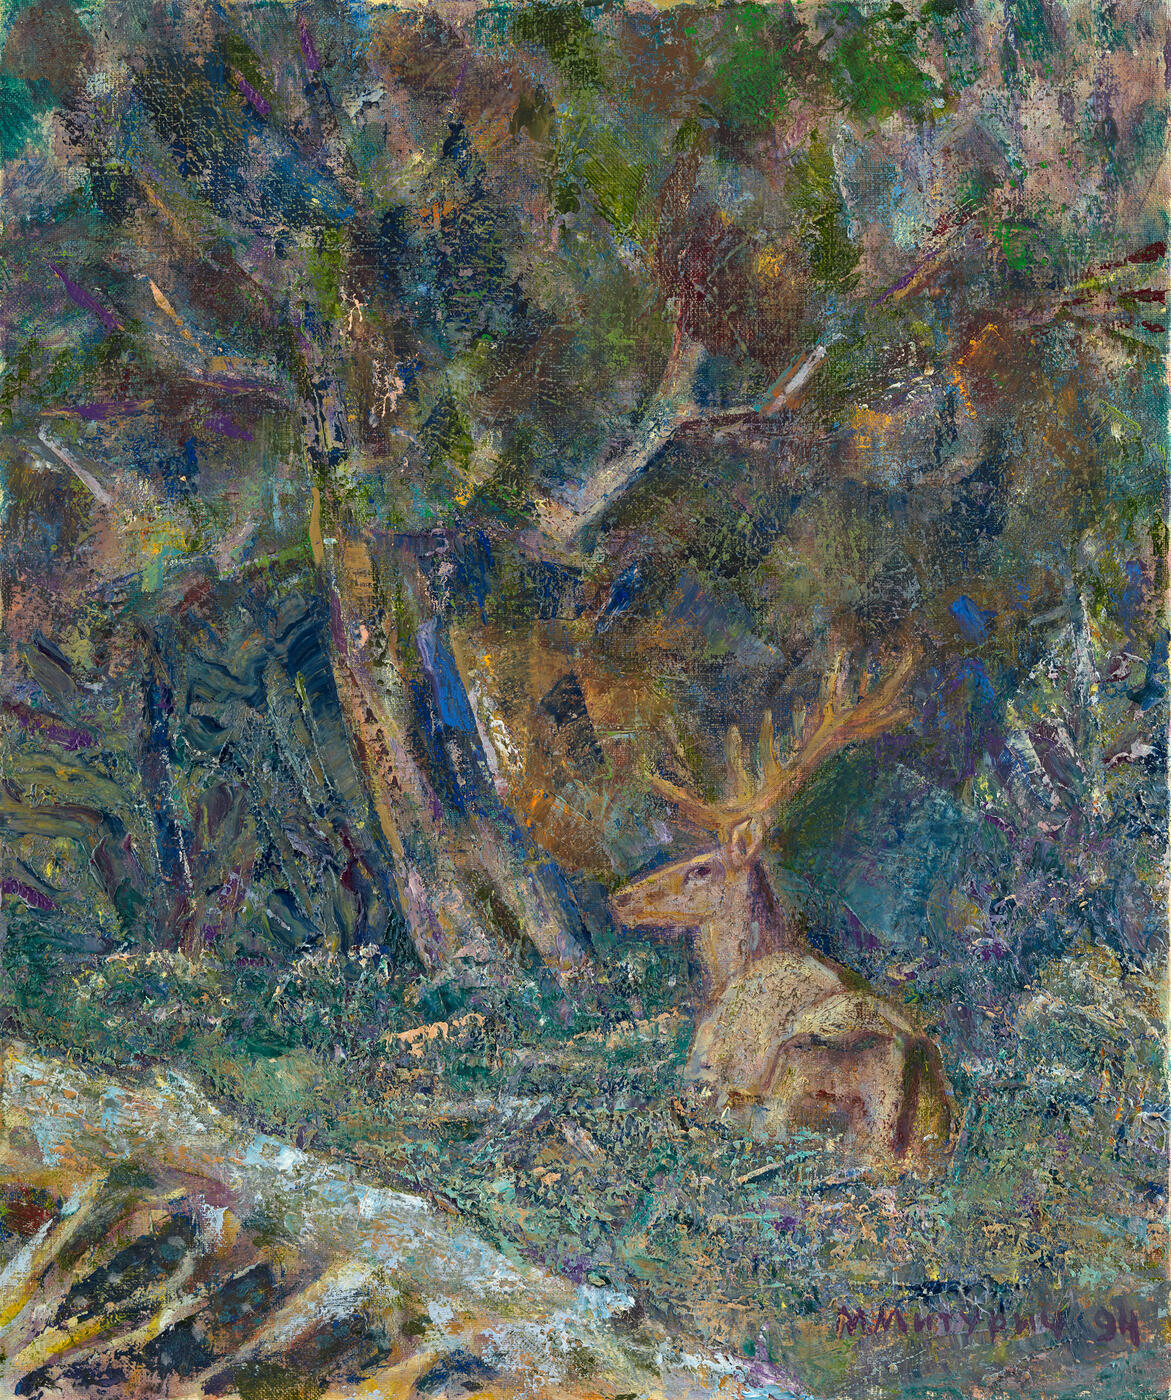 Landscape with a Deer